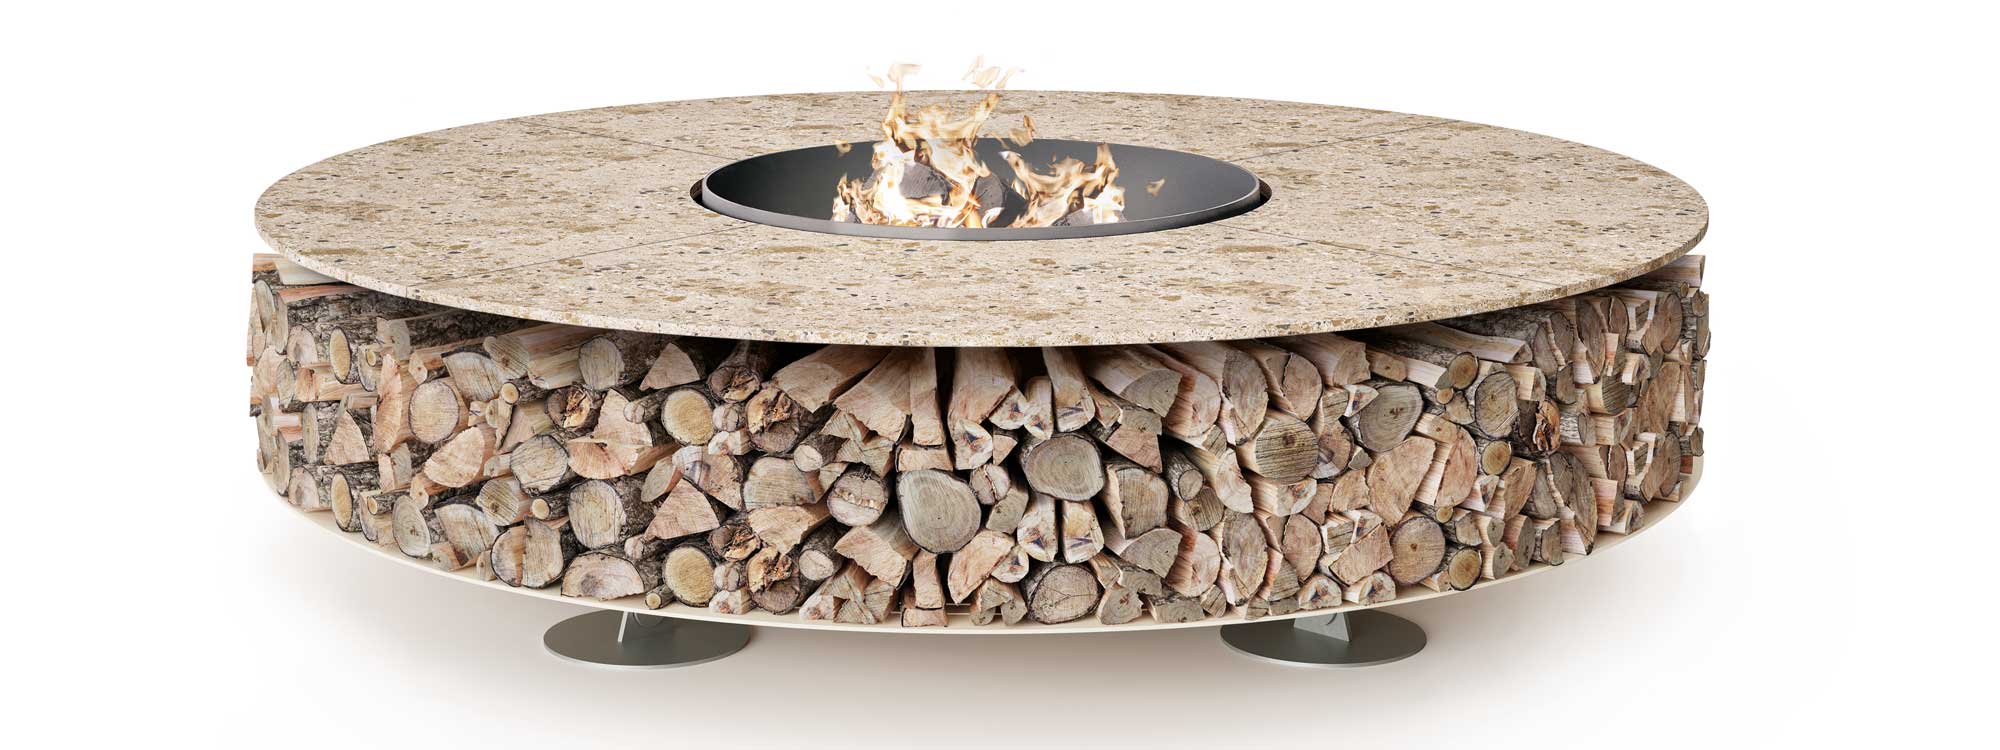 Studio image of lit AK47 Zero circular fire pit with Arlecchino ceramic surround